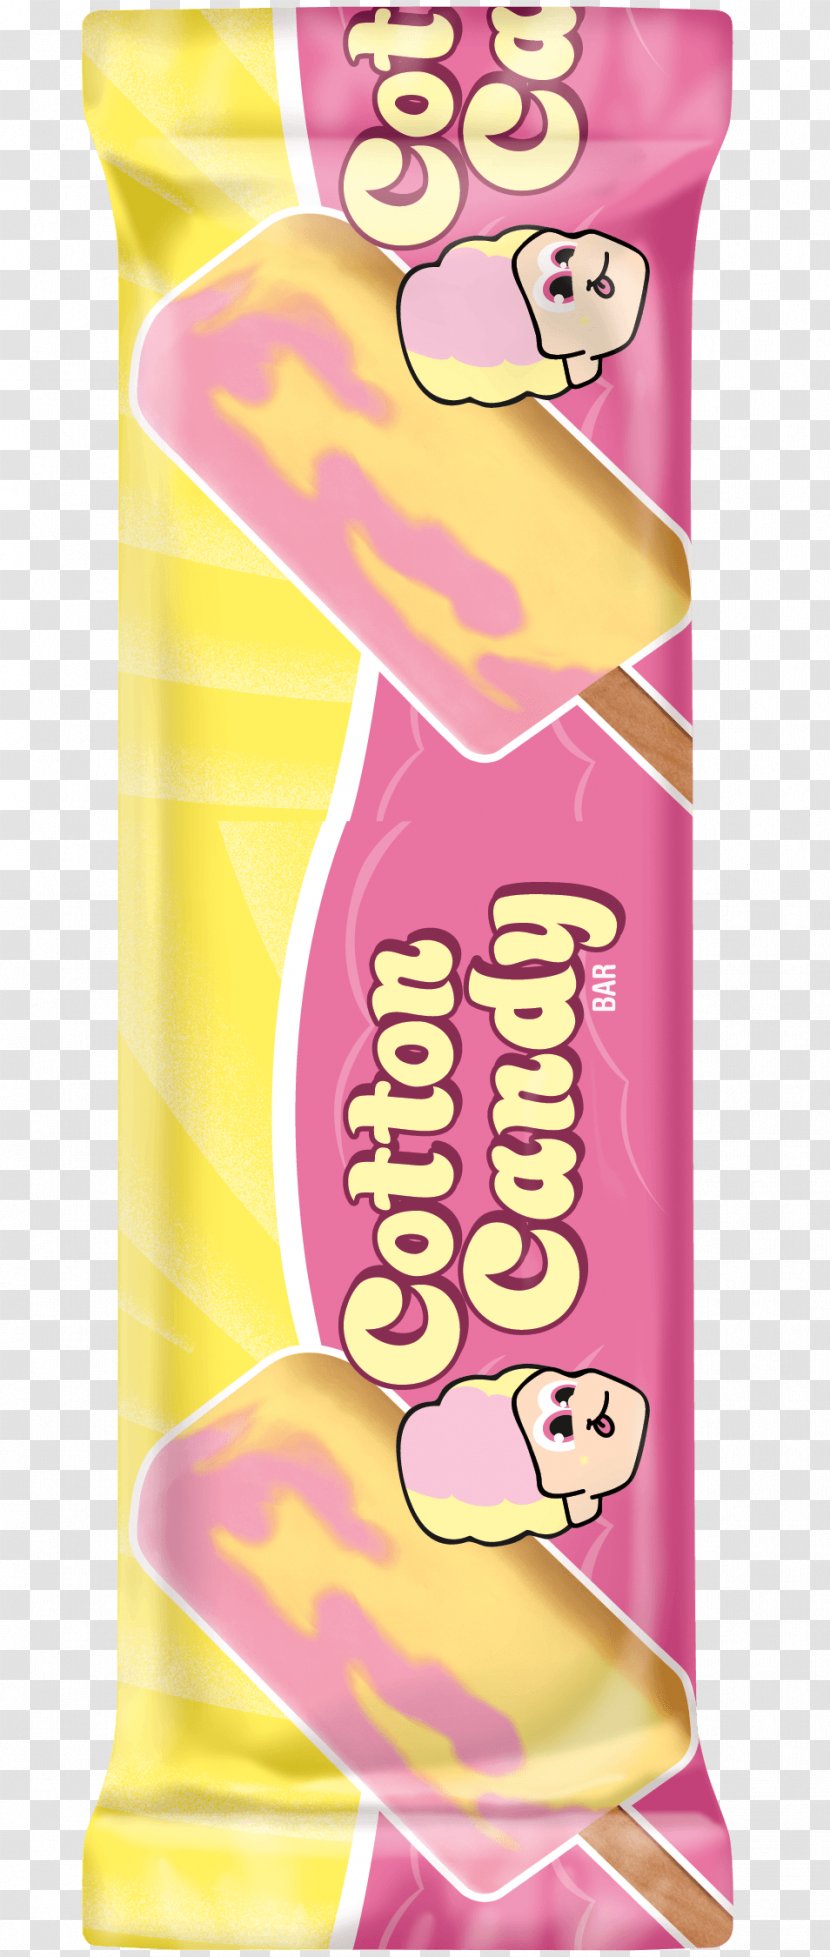 Junk Food Flavor Cartoon - Cotton Candy Transparent PNG